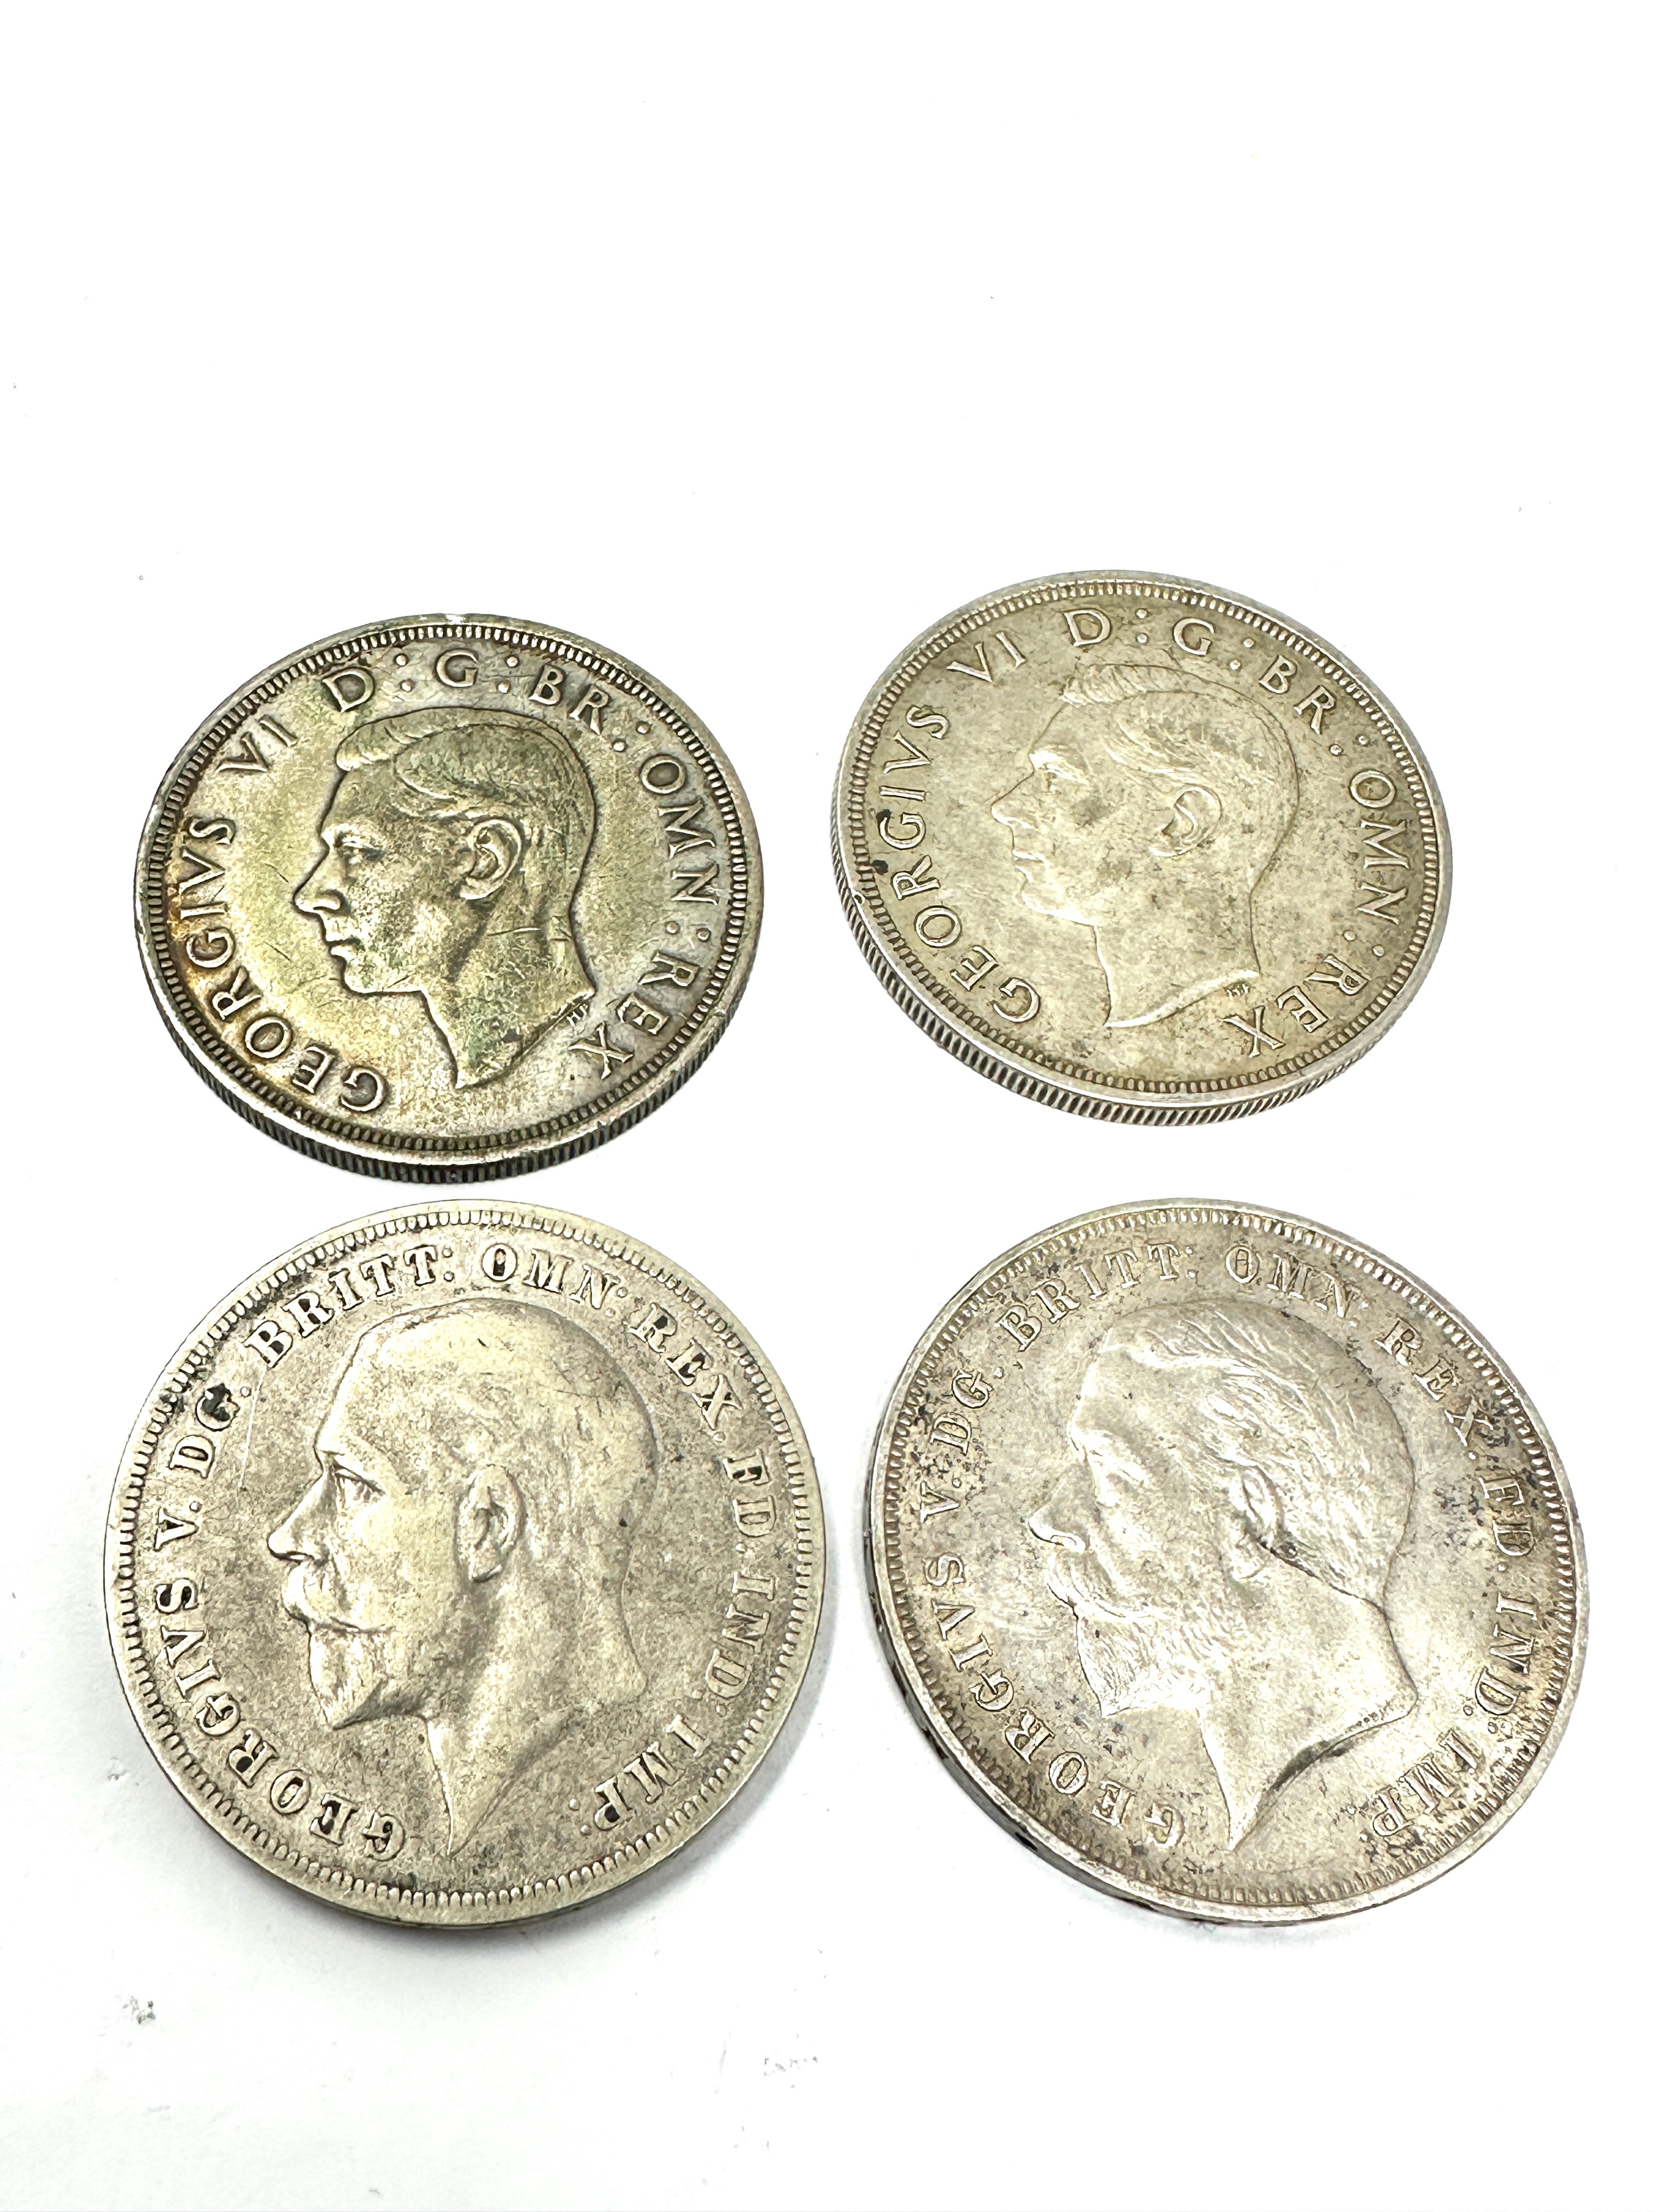 4 silver crowns 2 x 1937 & 2 x 1935